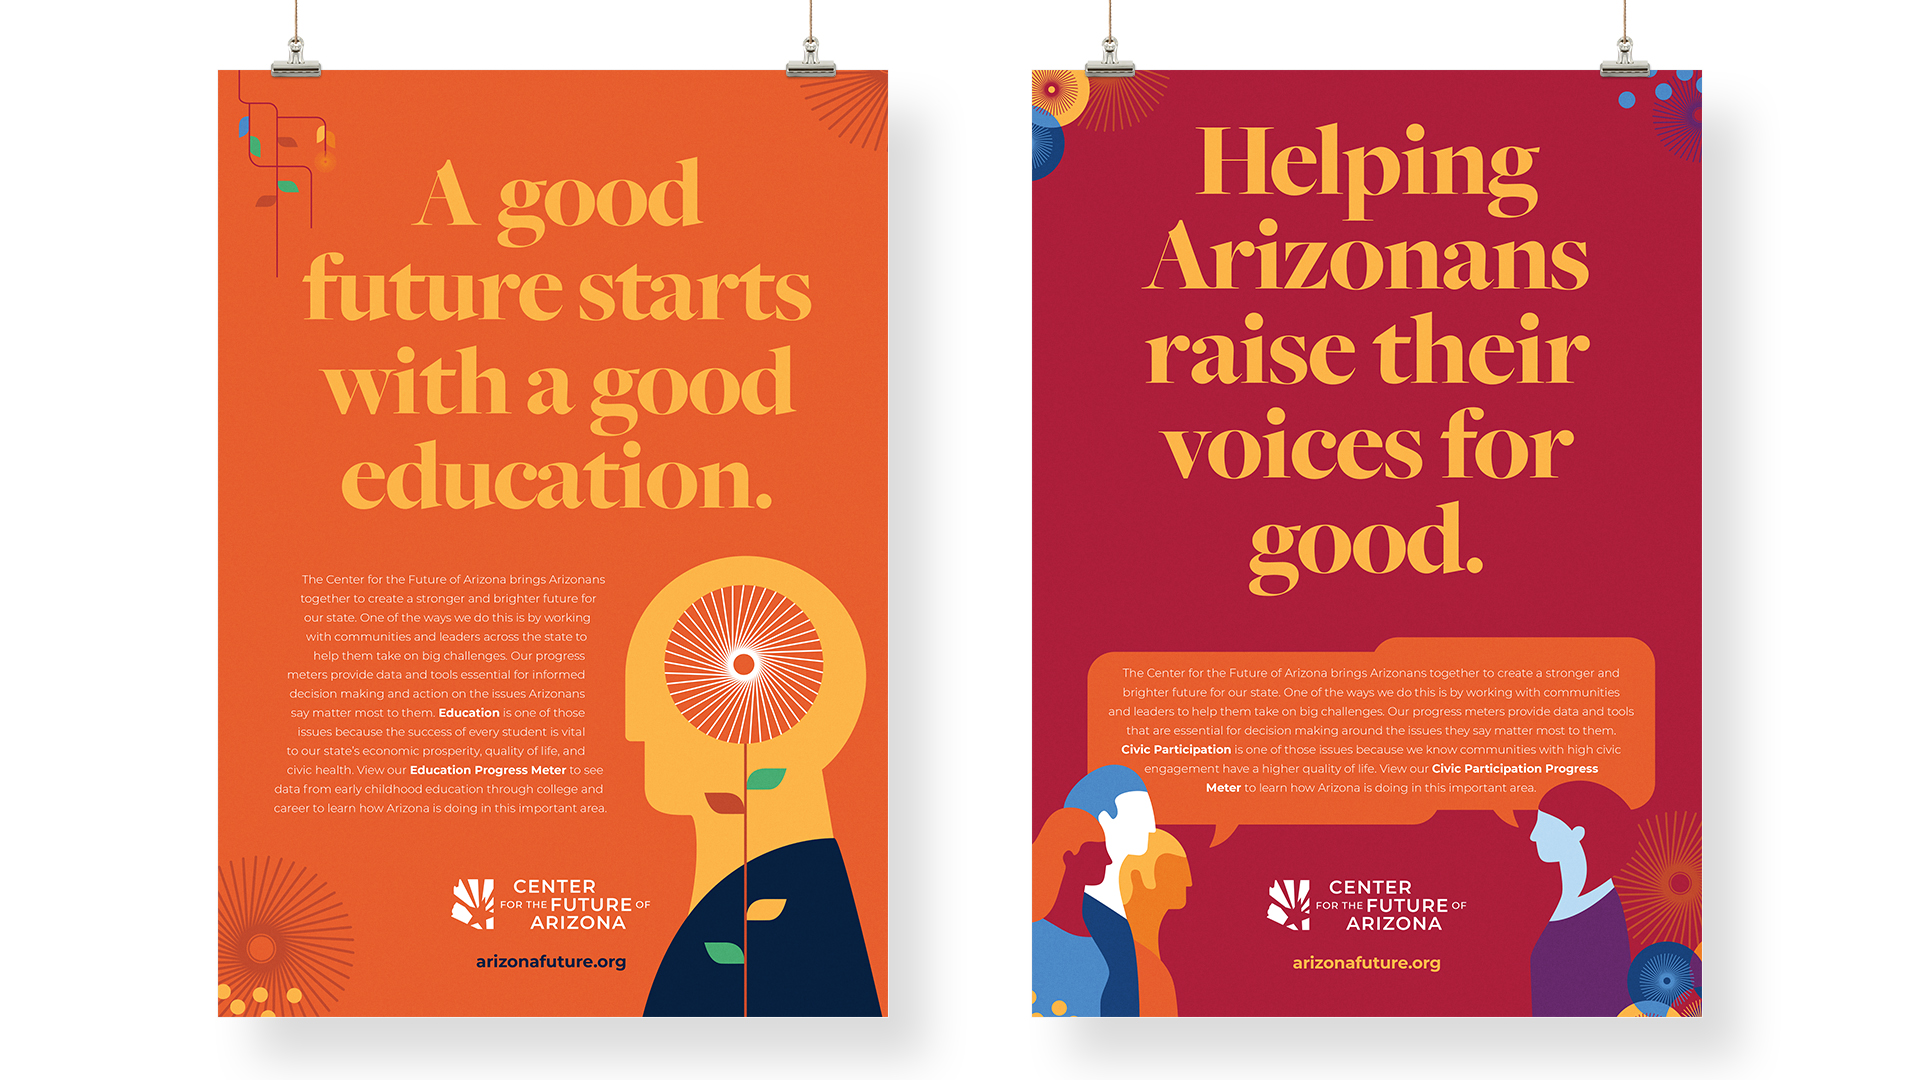 featured image:Center for the Future of Arizona Rebrand & Print Campaign